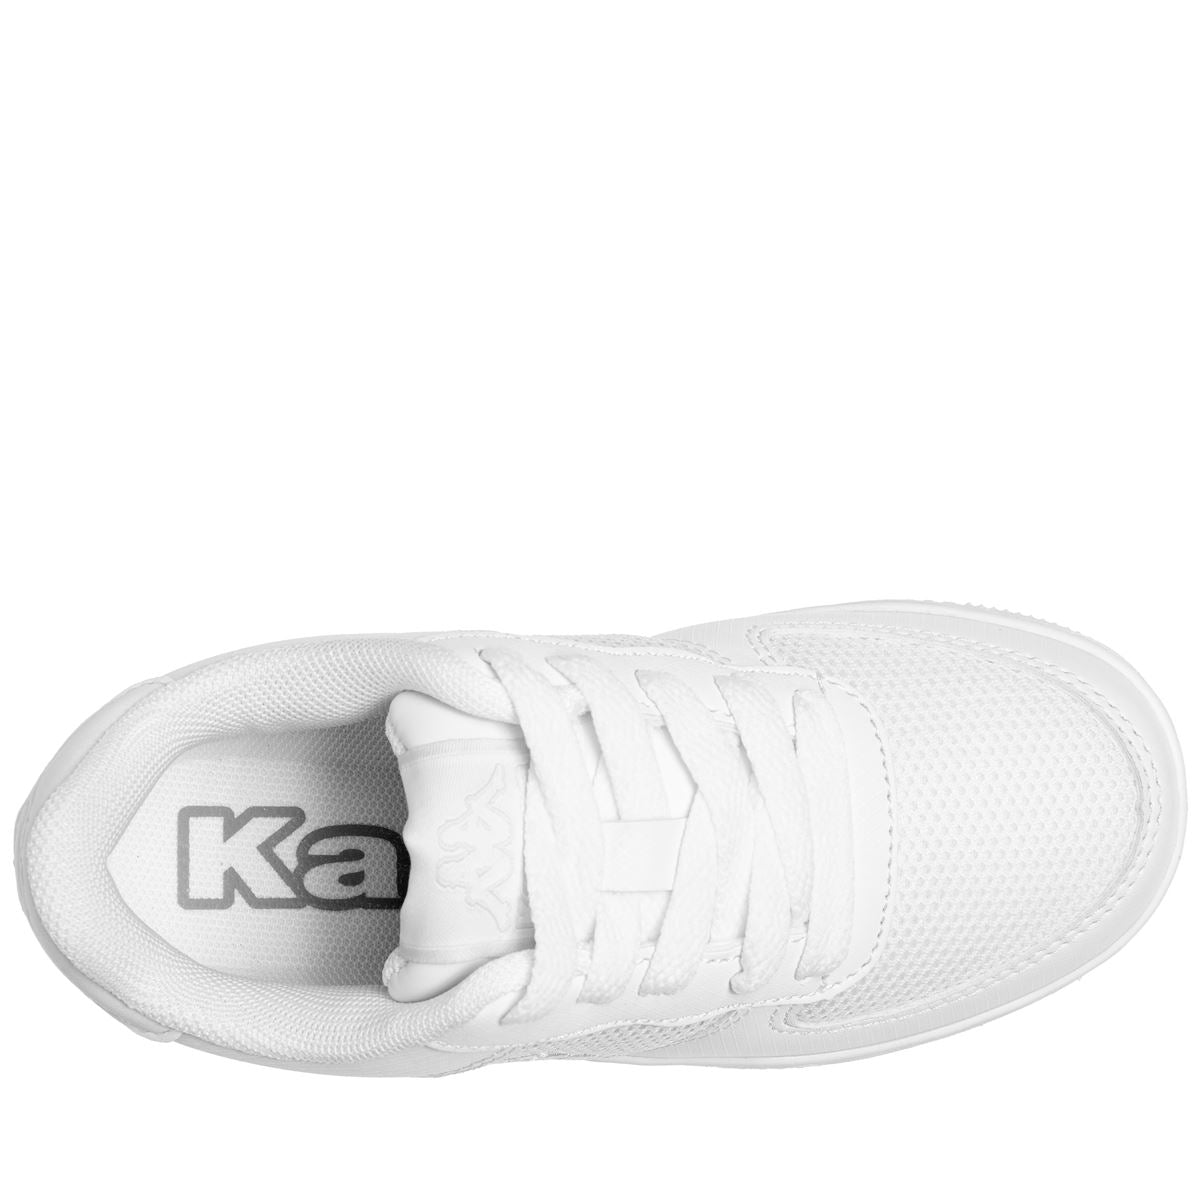 Kappa sneaker logo Salerno 2kid - Kappa